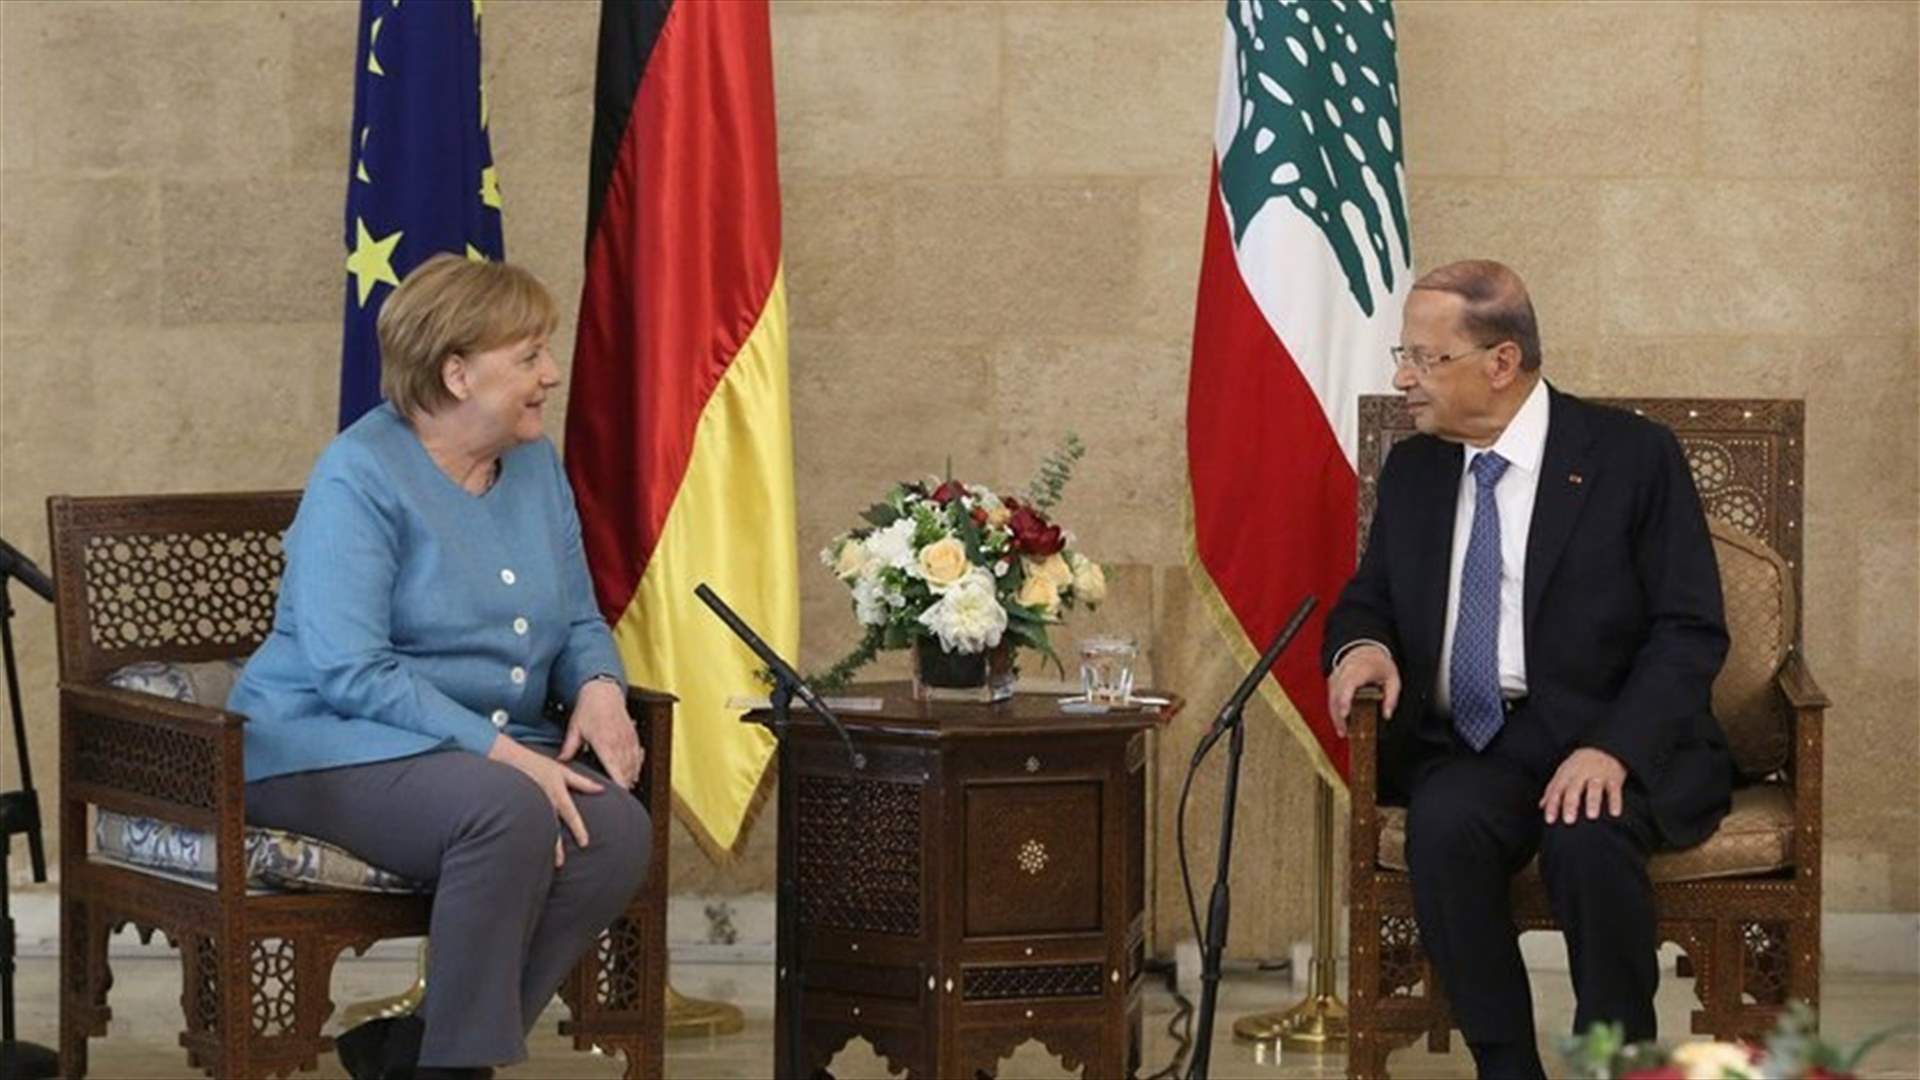 Merkel wraps up official visit by meeting Aoun